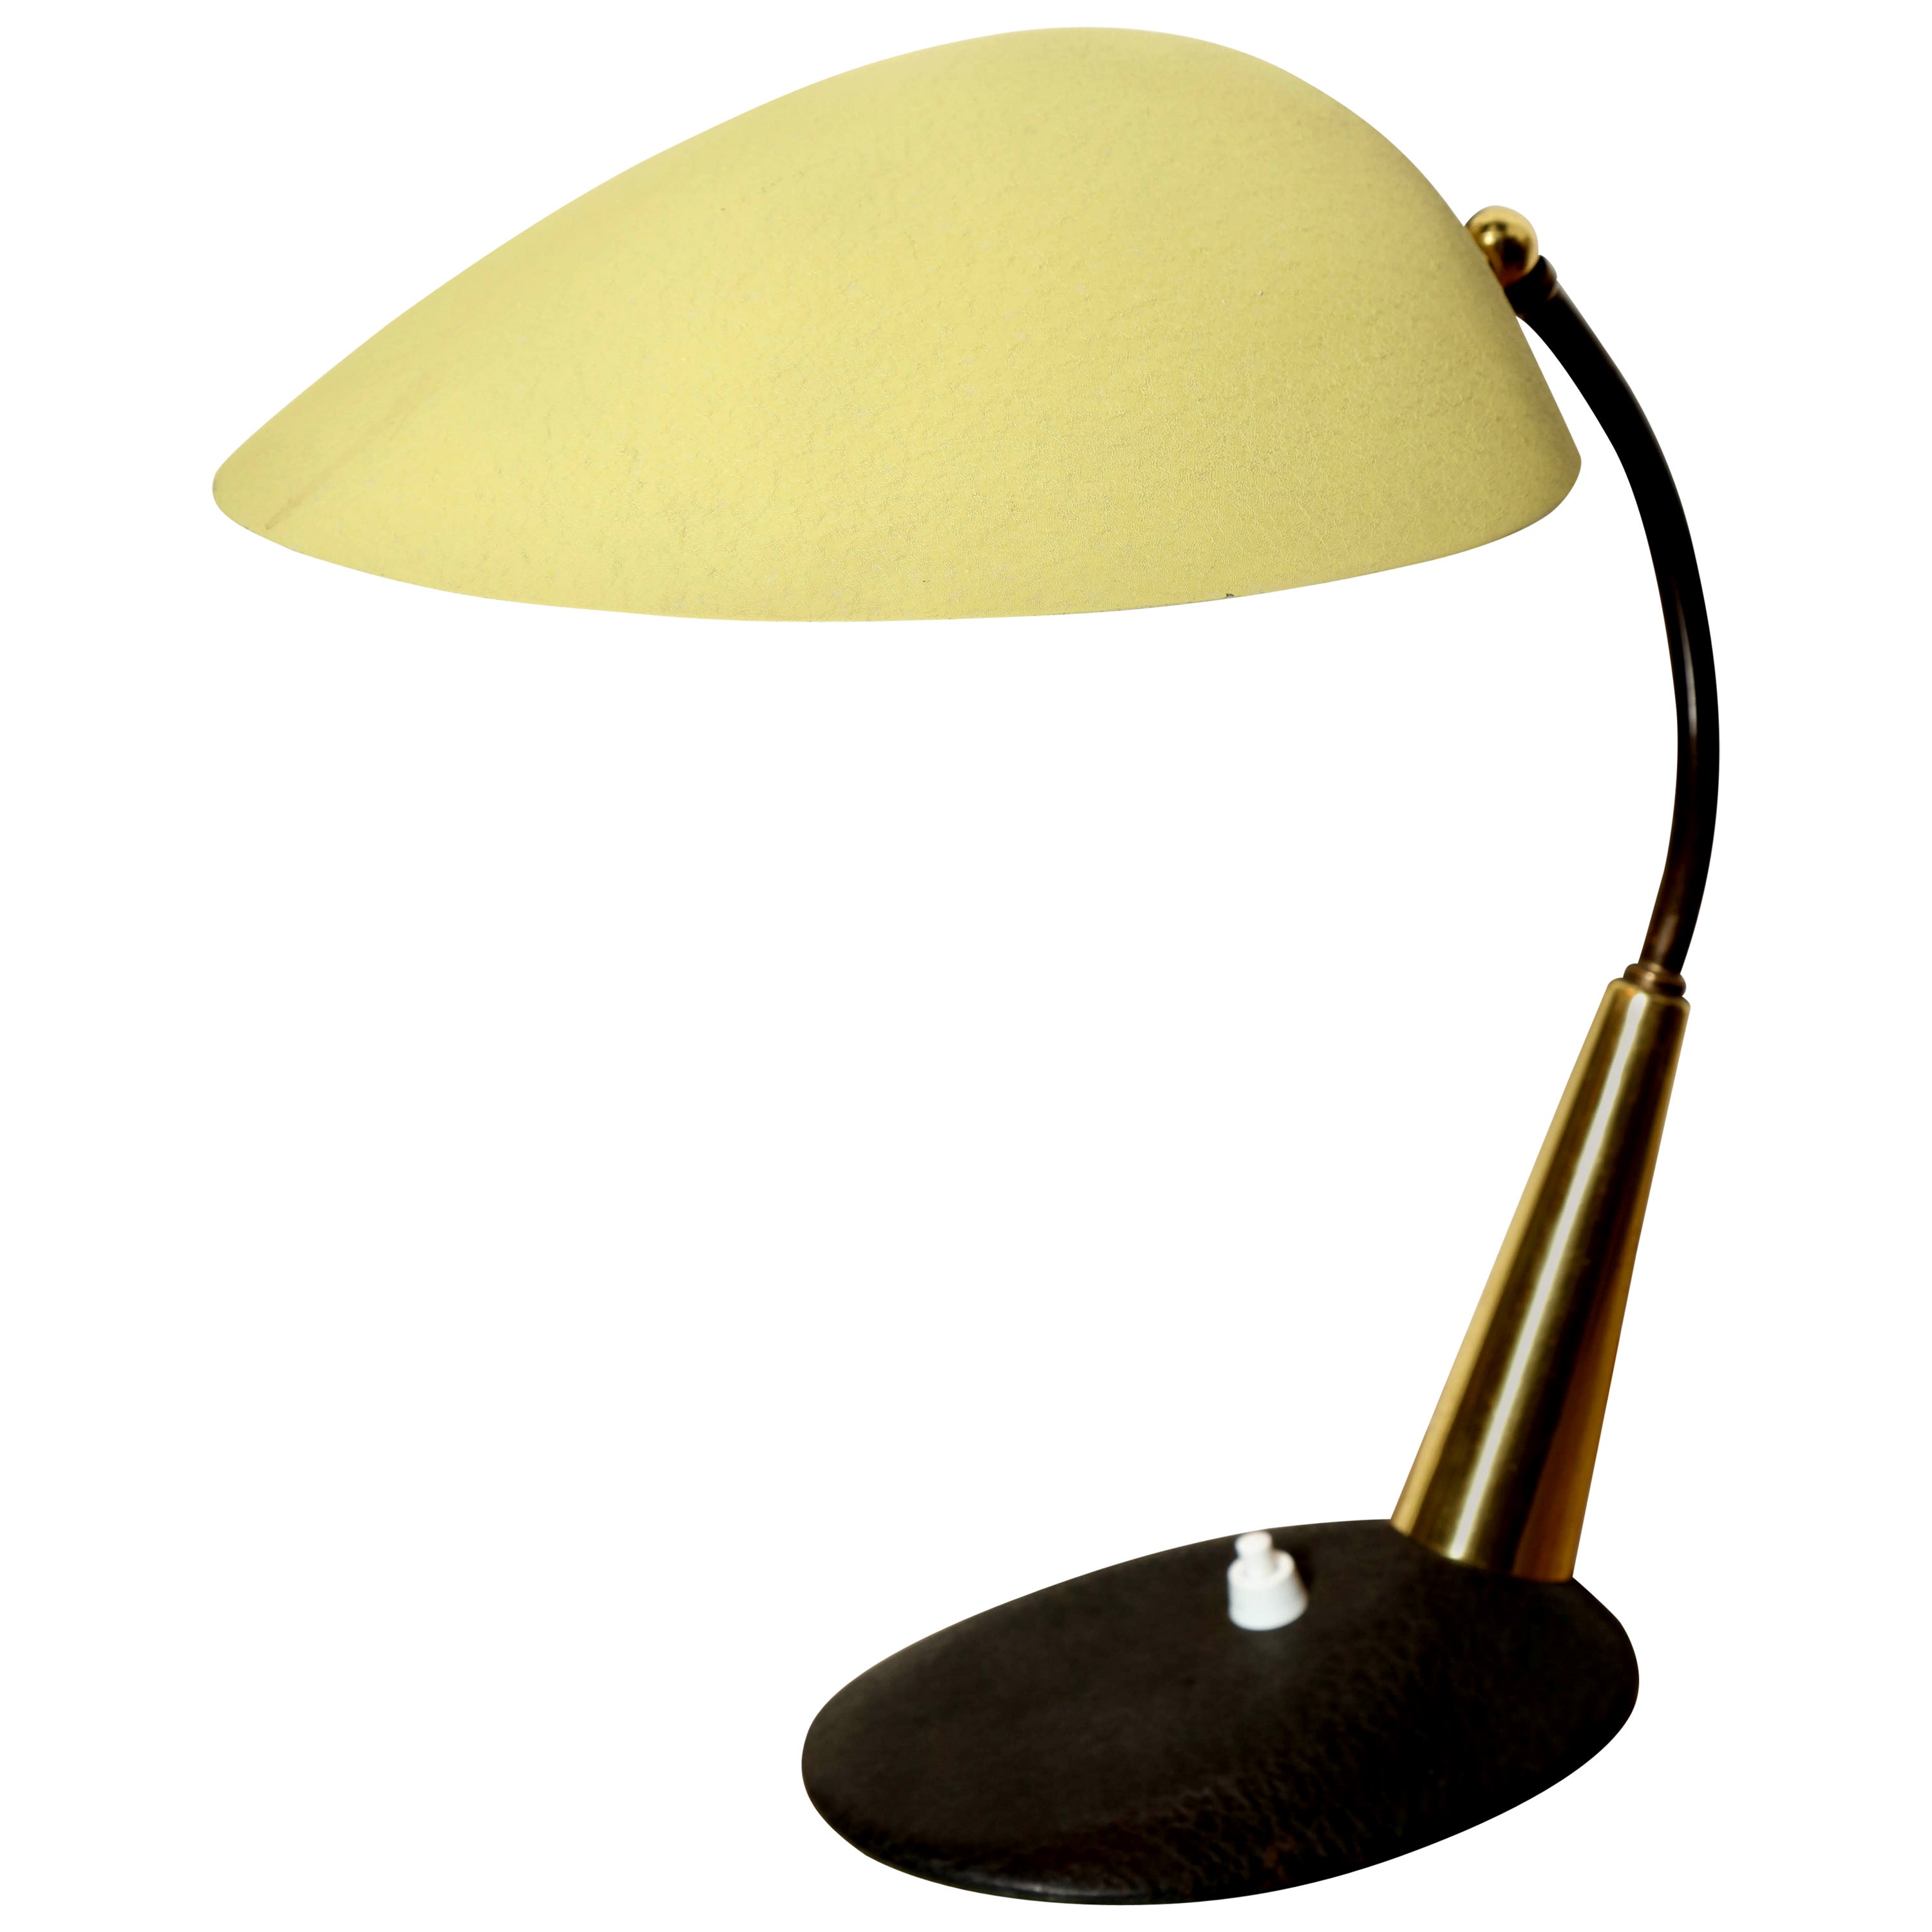 Italian Yellow Desk Lamp - 8 For Sale on 1stDibs